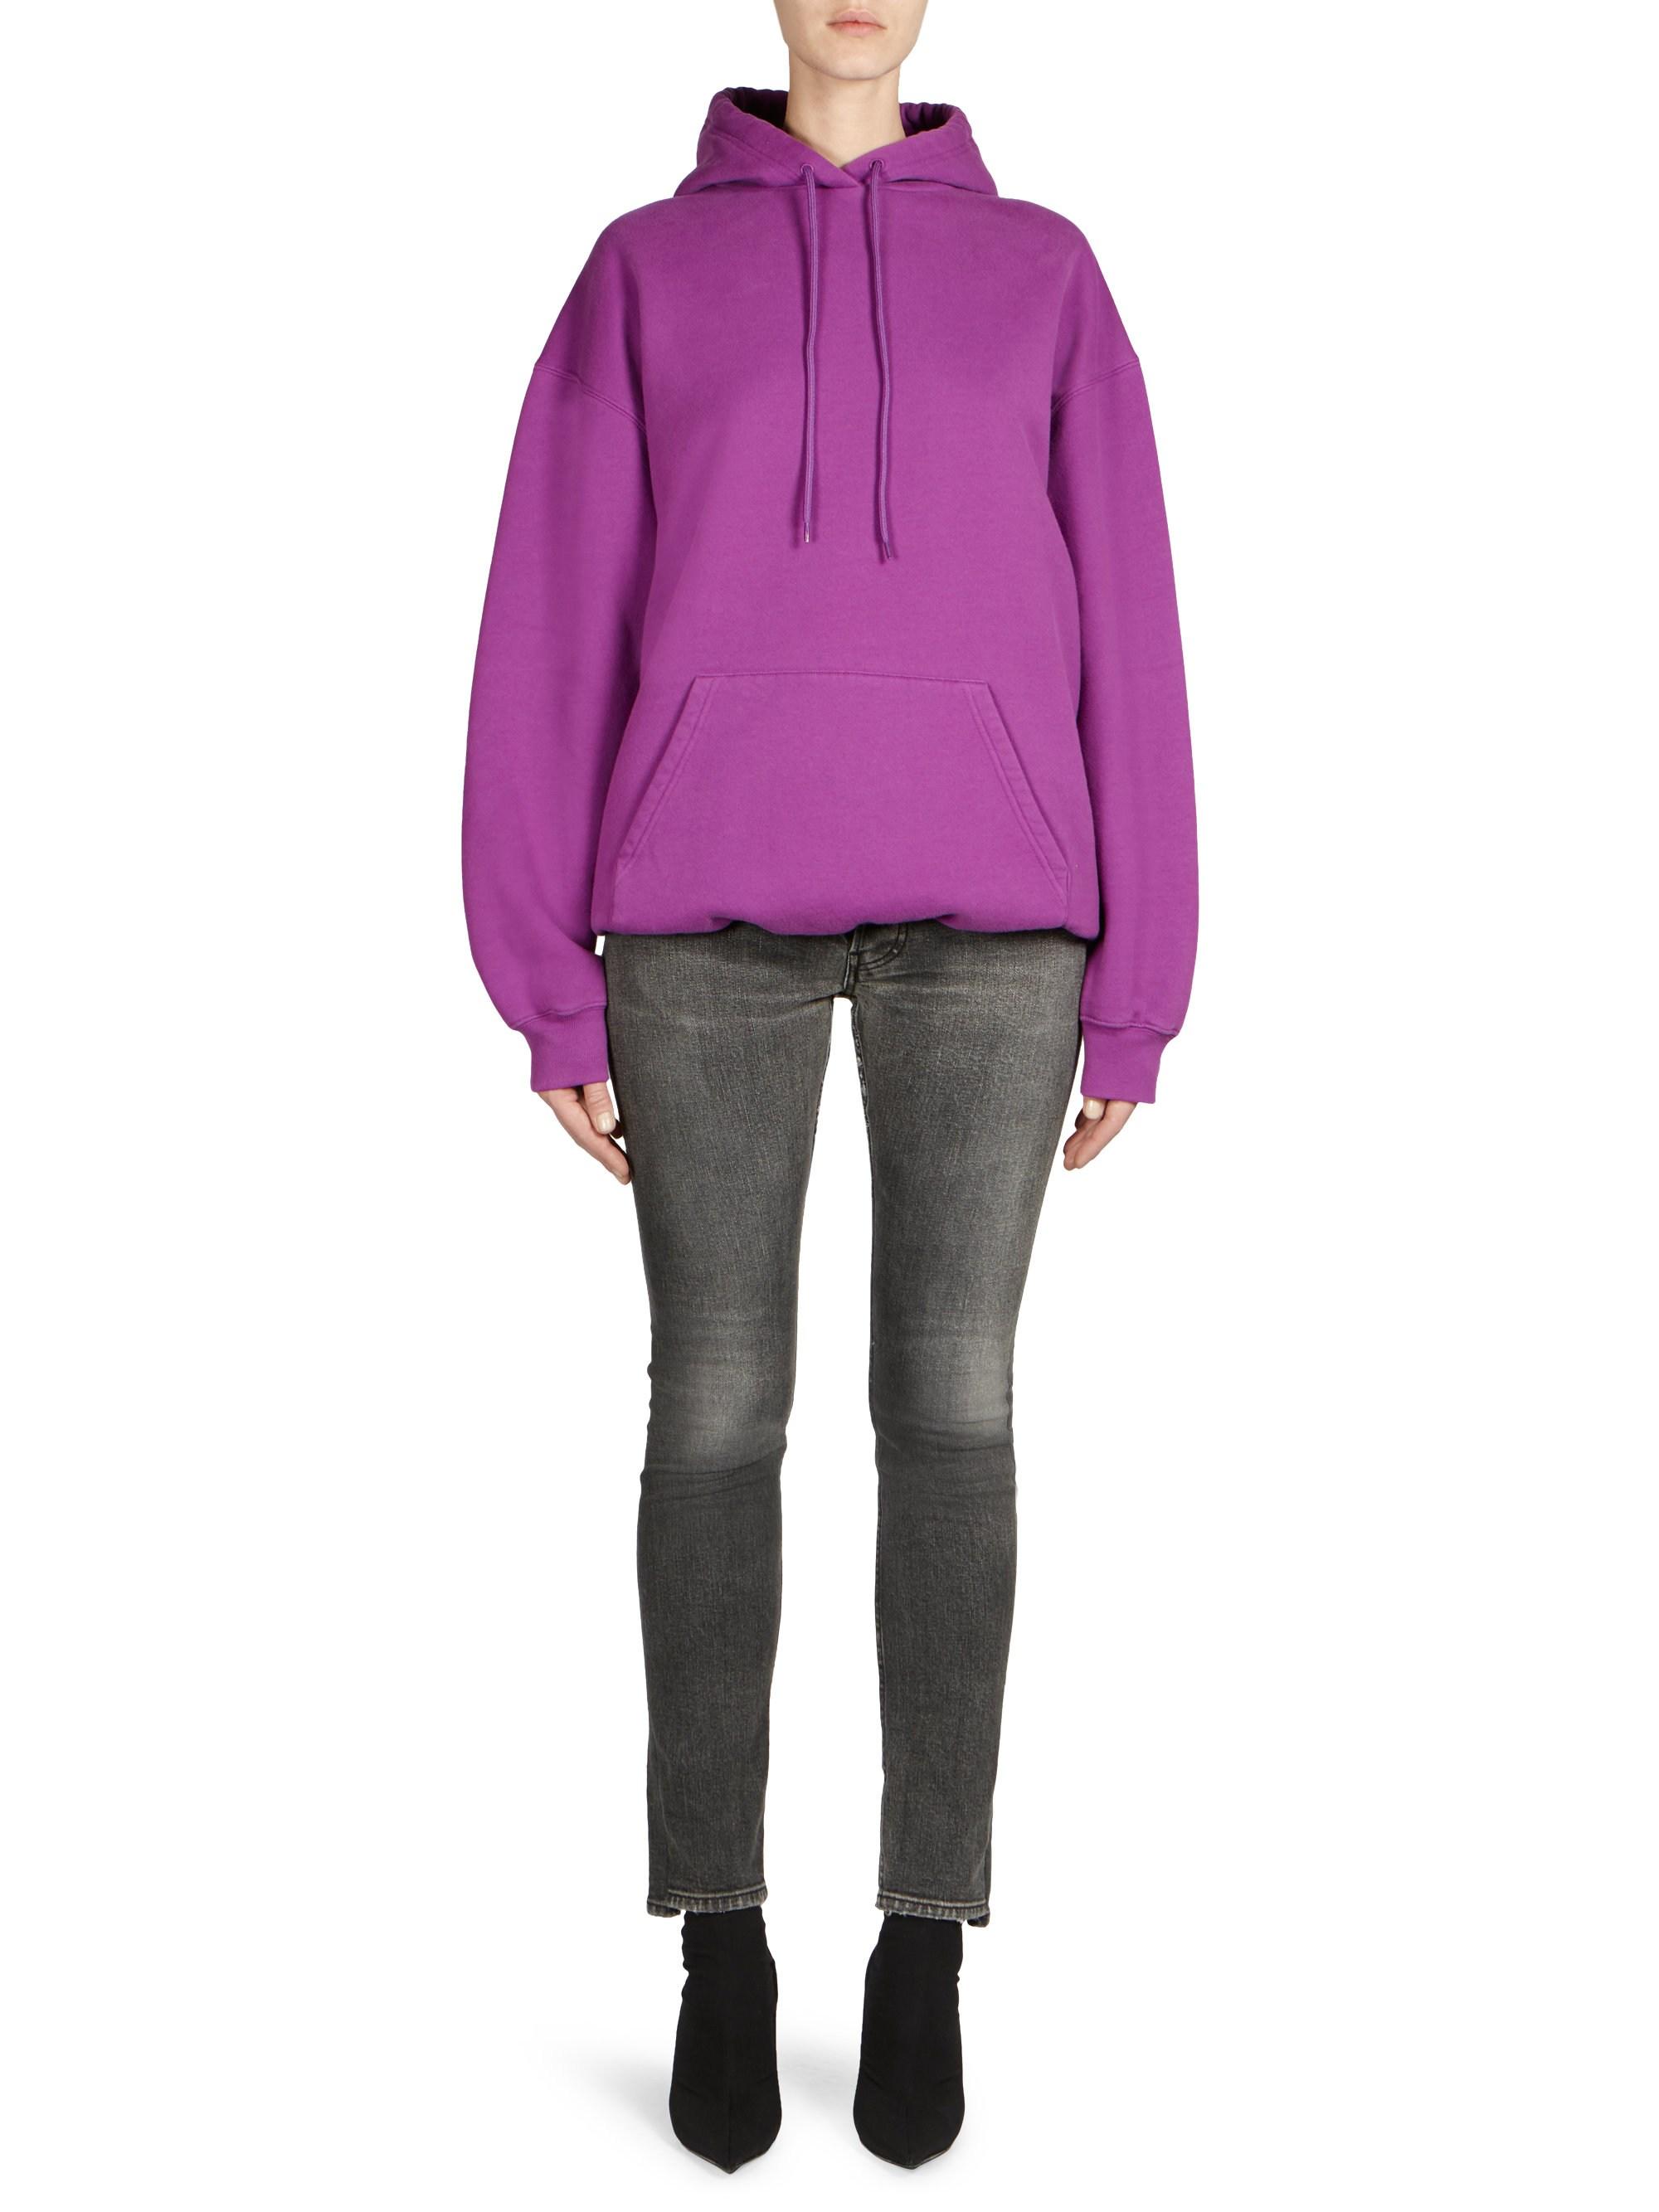 balenciaga sweatsuit womens purple